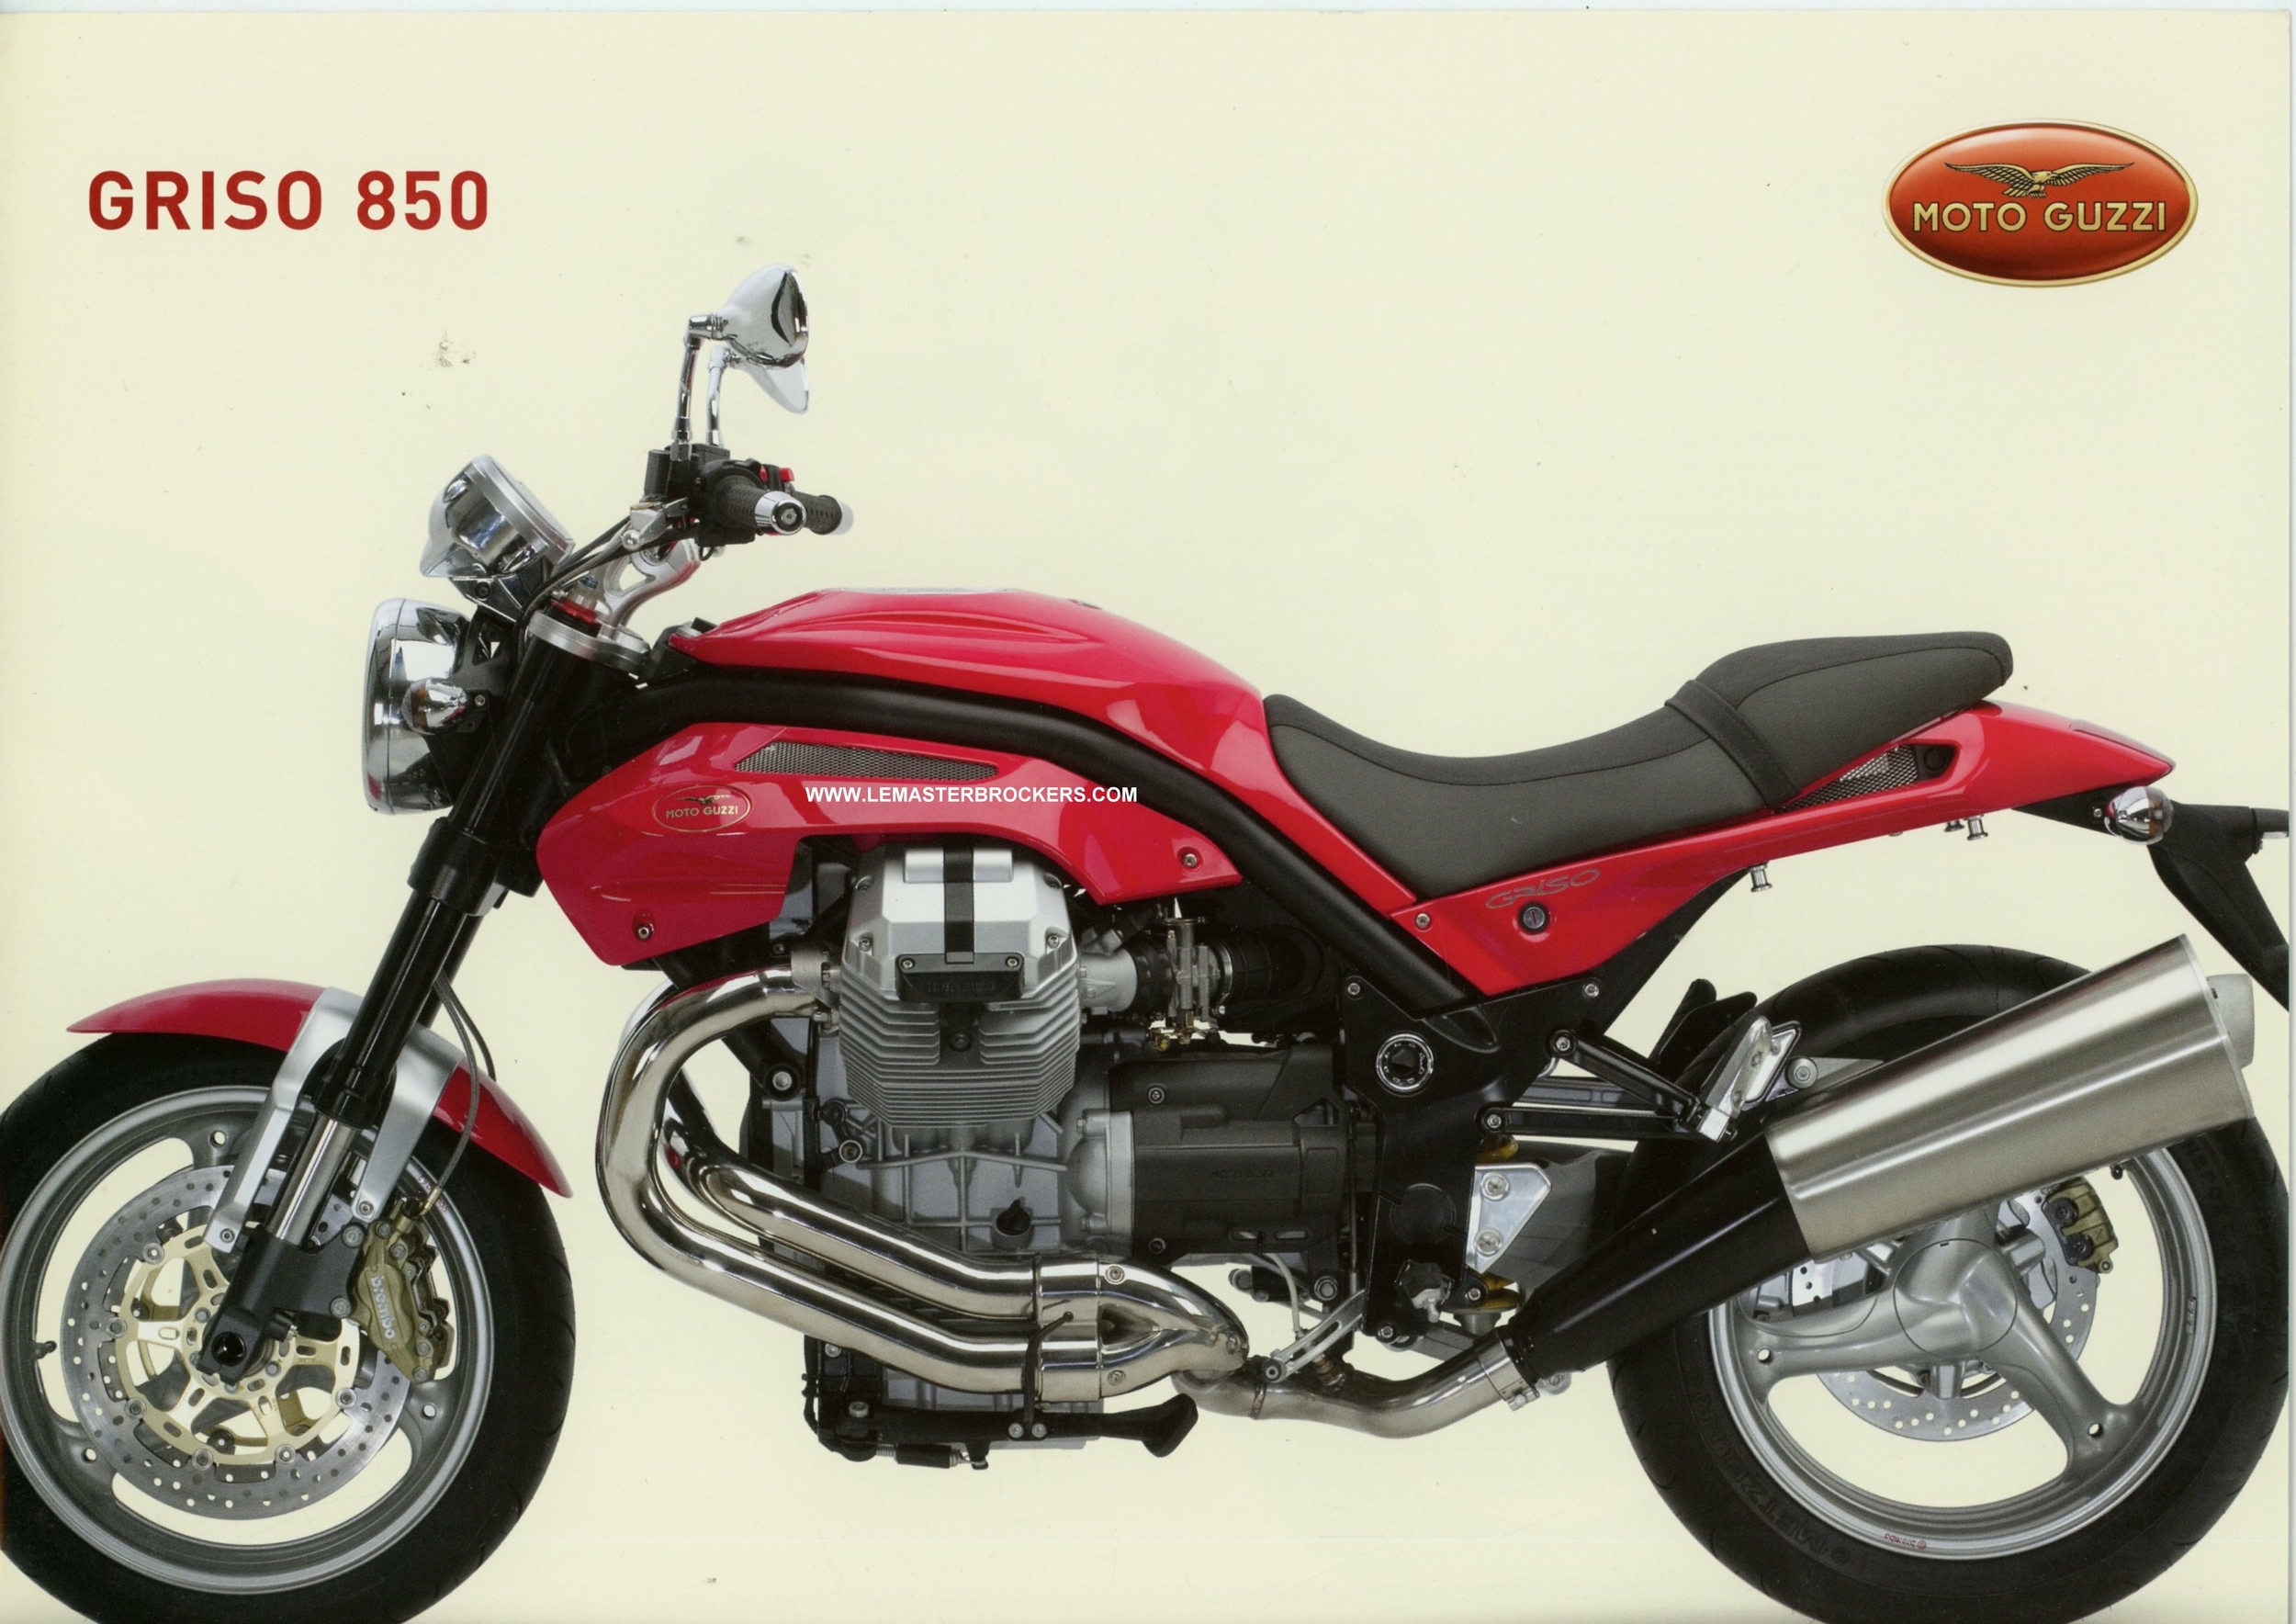 MOTO-GUZZI-GRISSO-850-BROCHURE-PROSPECTUS-LEMASTERBROCKERS-catalogue-MOTO